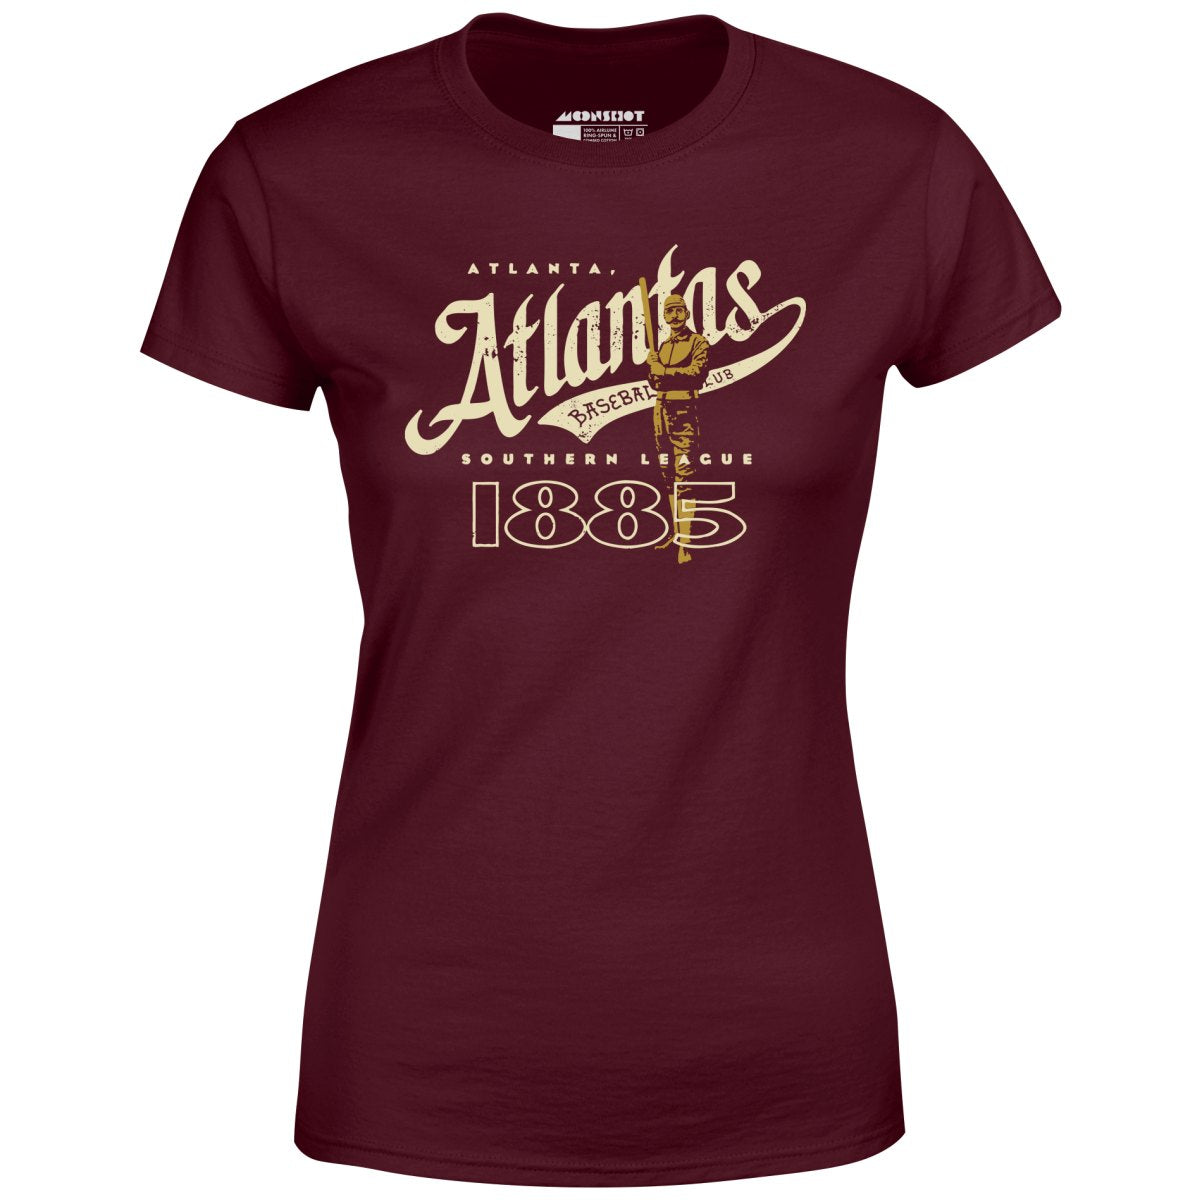 Atlanta Atlantas - Georgia - Vintage Defunct Baseball Teams - Women's T-Shirt